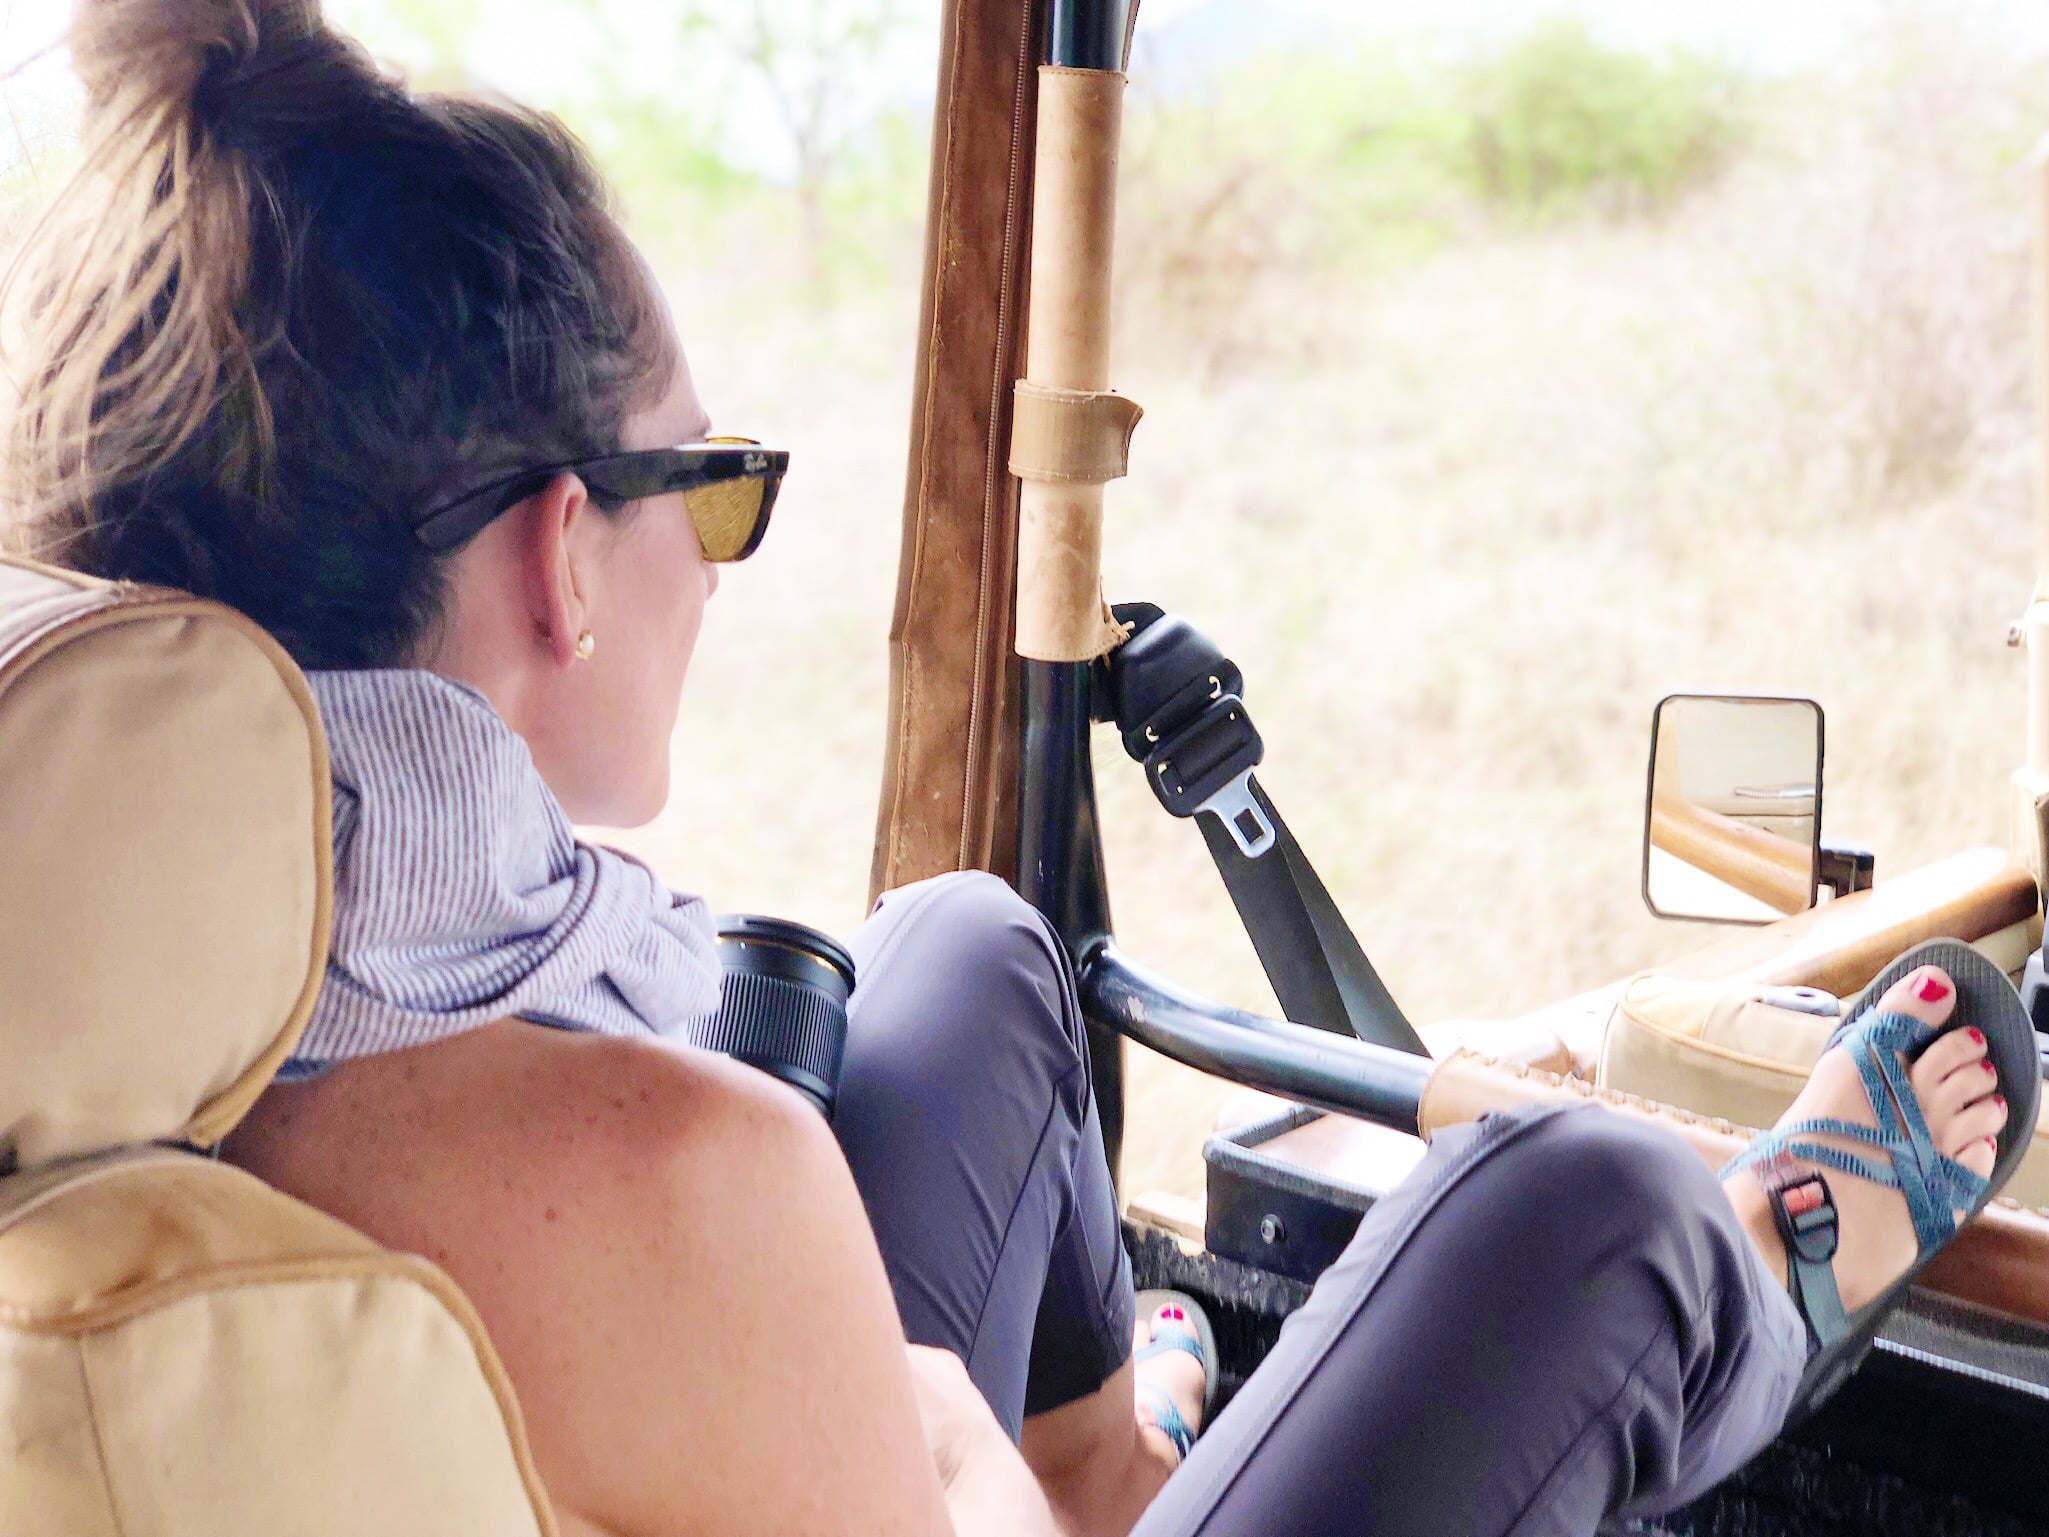 Kenya Safari Packing List - What To Take On Safari In Kenya - Best Shoes For Kenya Safari - Packing List for Masai Mara - Maasai Mara Packing List - Tsavo West Packing List - What To Wear On Safari - What To Pack For Kenya - Safari Packing List - Packing List For African Safari - African Safari Packing List - Backpacking Safari - Packing In A Backpack - The North Face Banchee Packs - #africa #travel #travelblog #kenya #packinglist